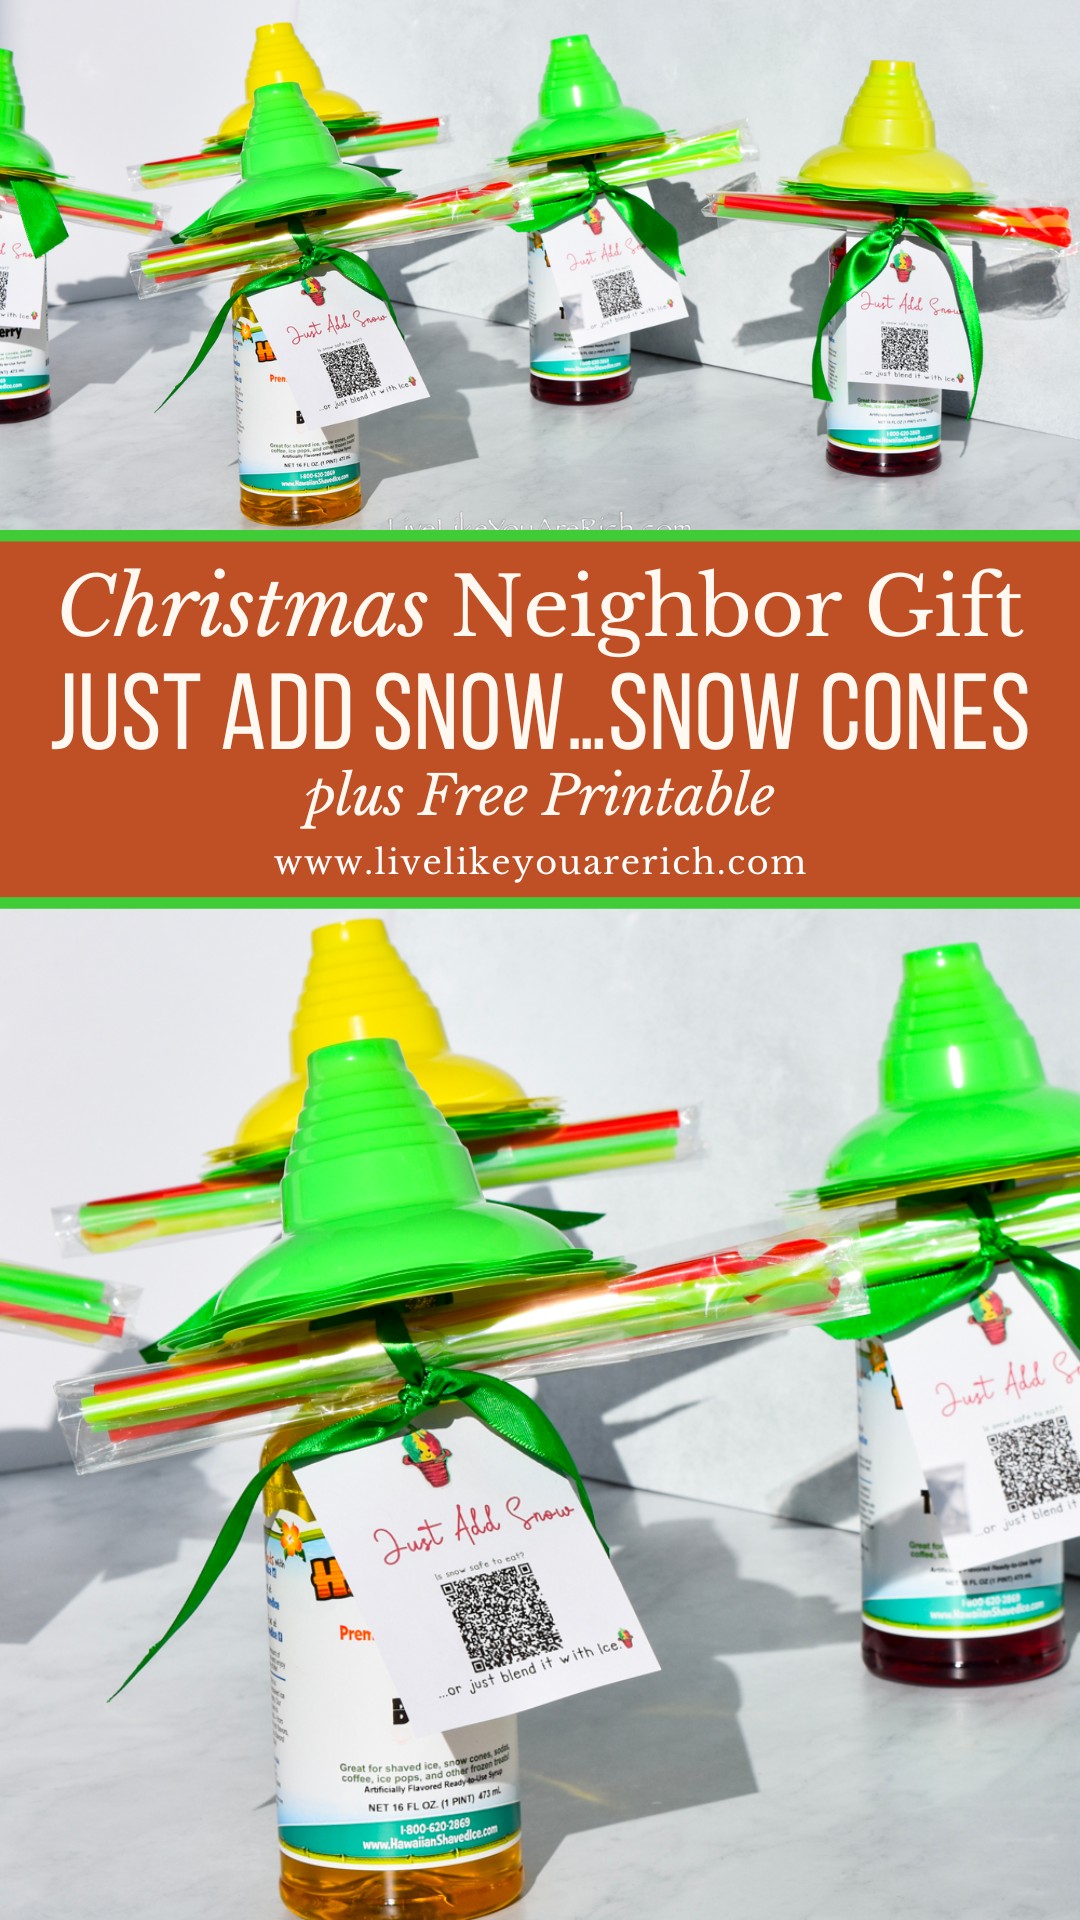 Christmas Neighbor Gift Just Add Snow...Snow Cones plus Free Printable